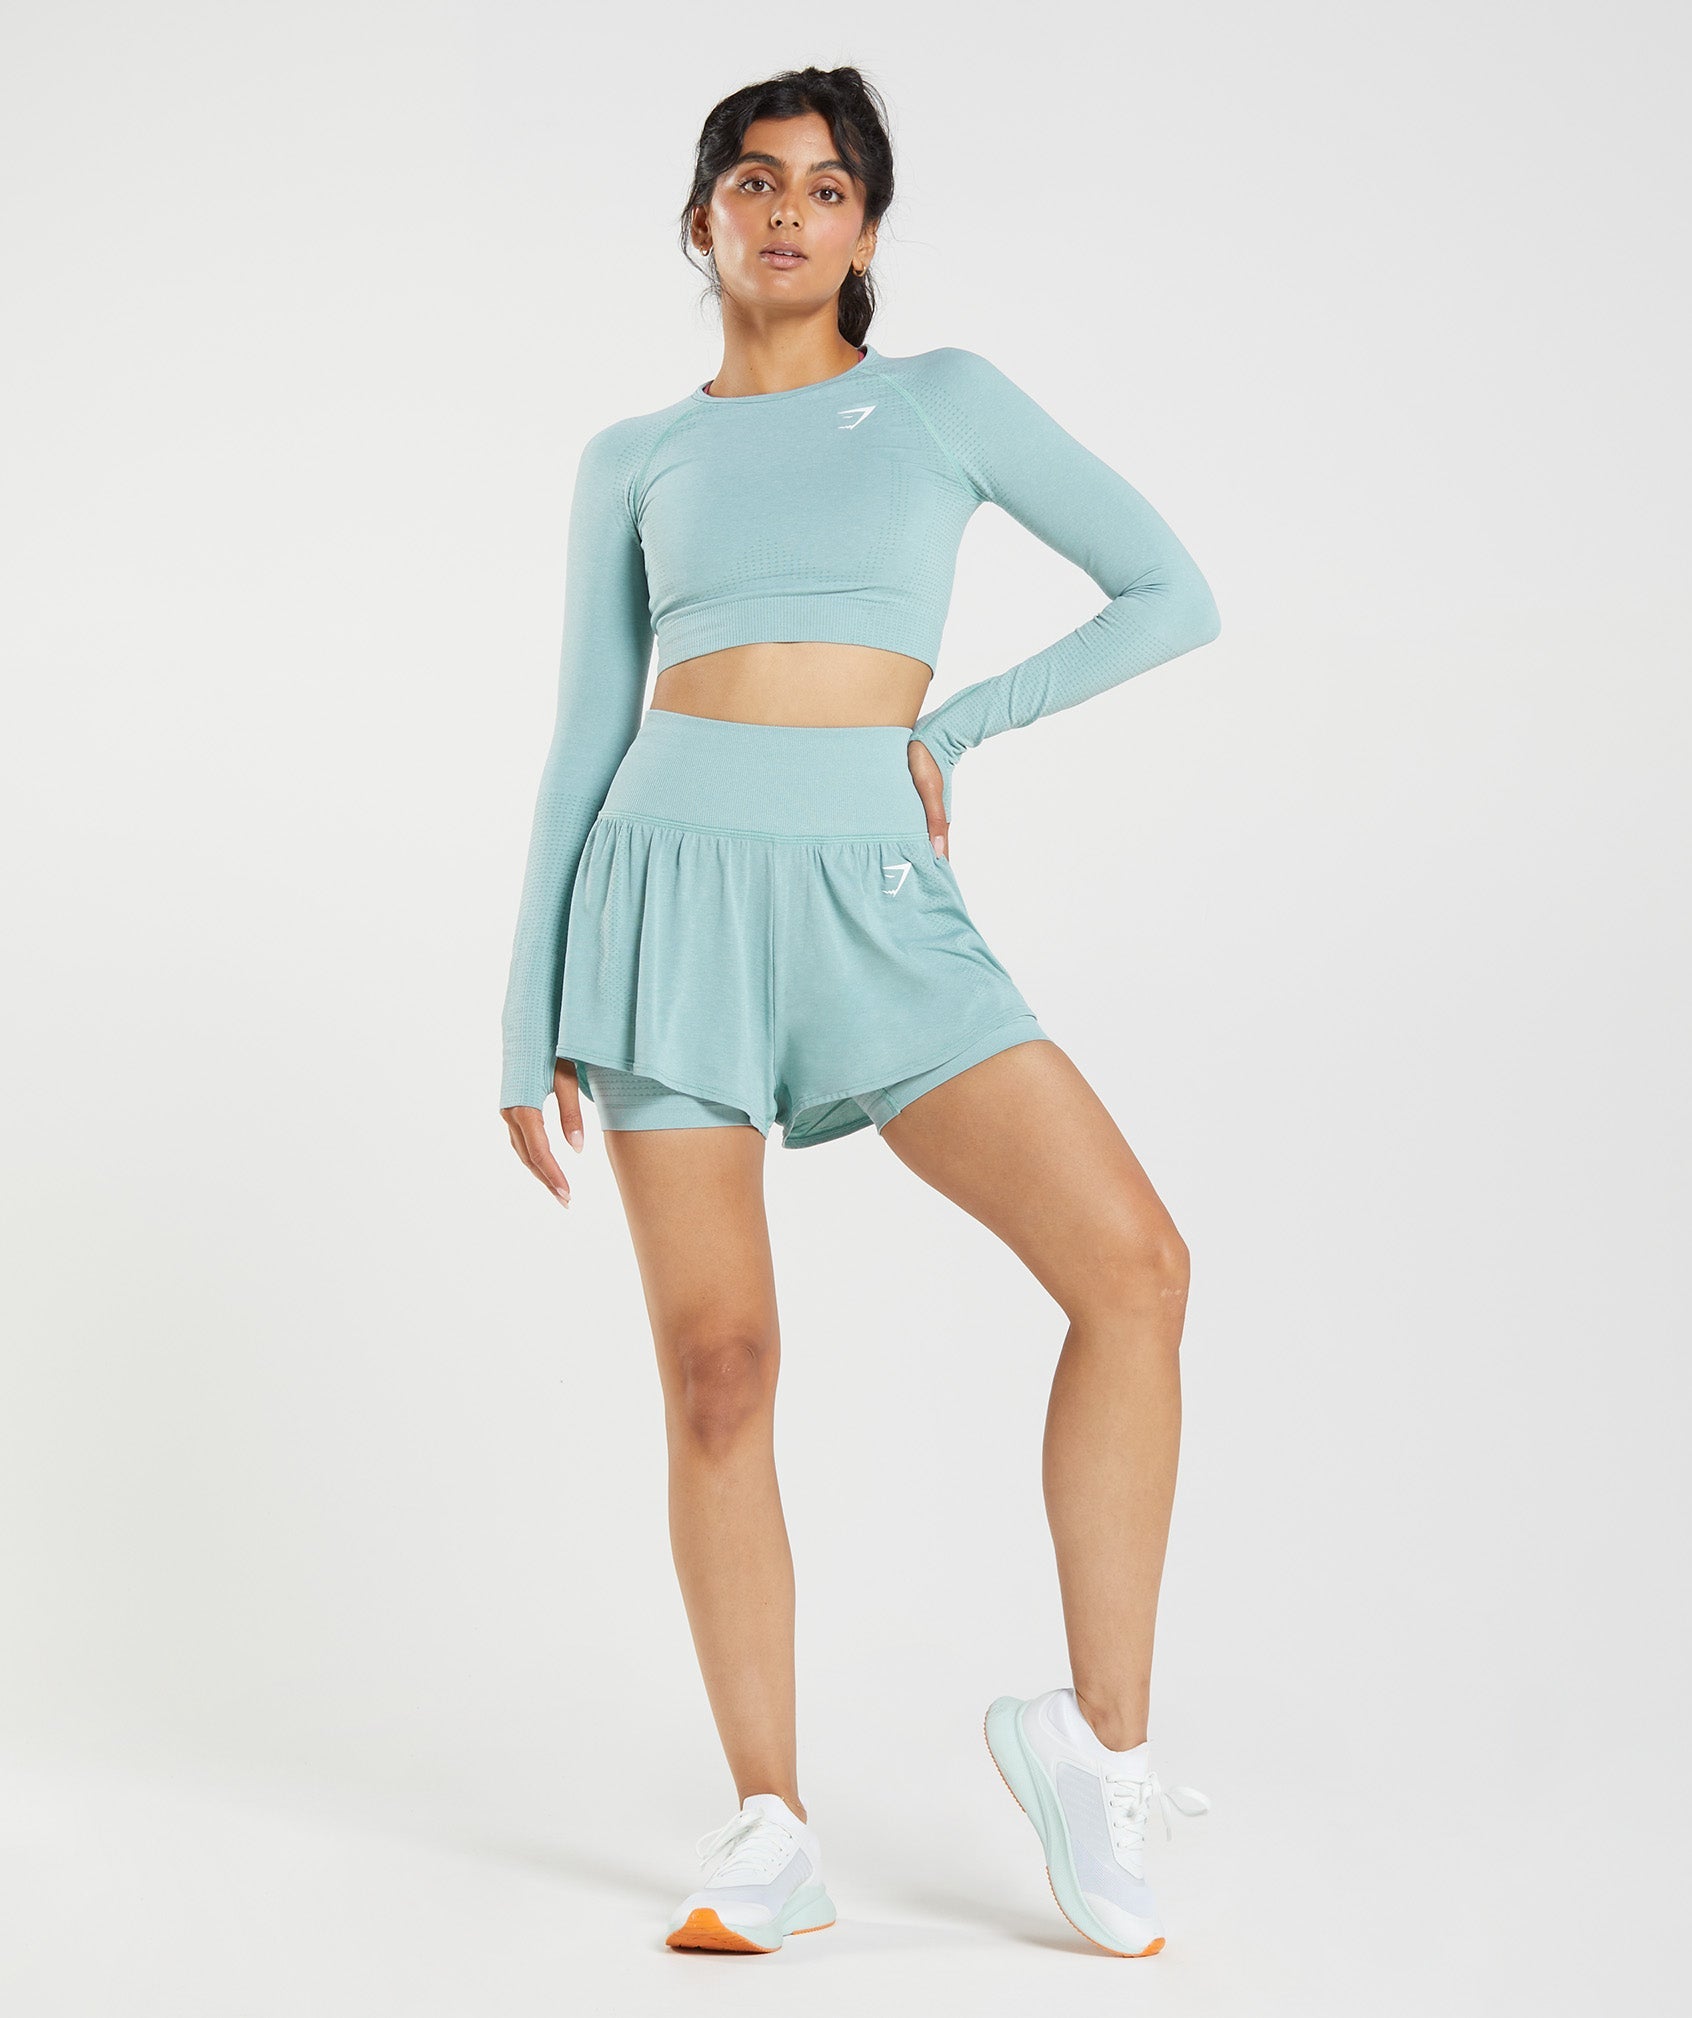 Gymshark vital seamless shorts size small never - Depop